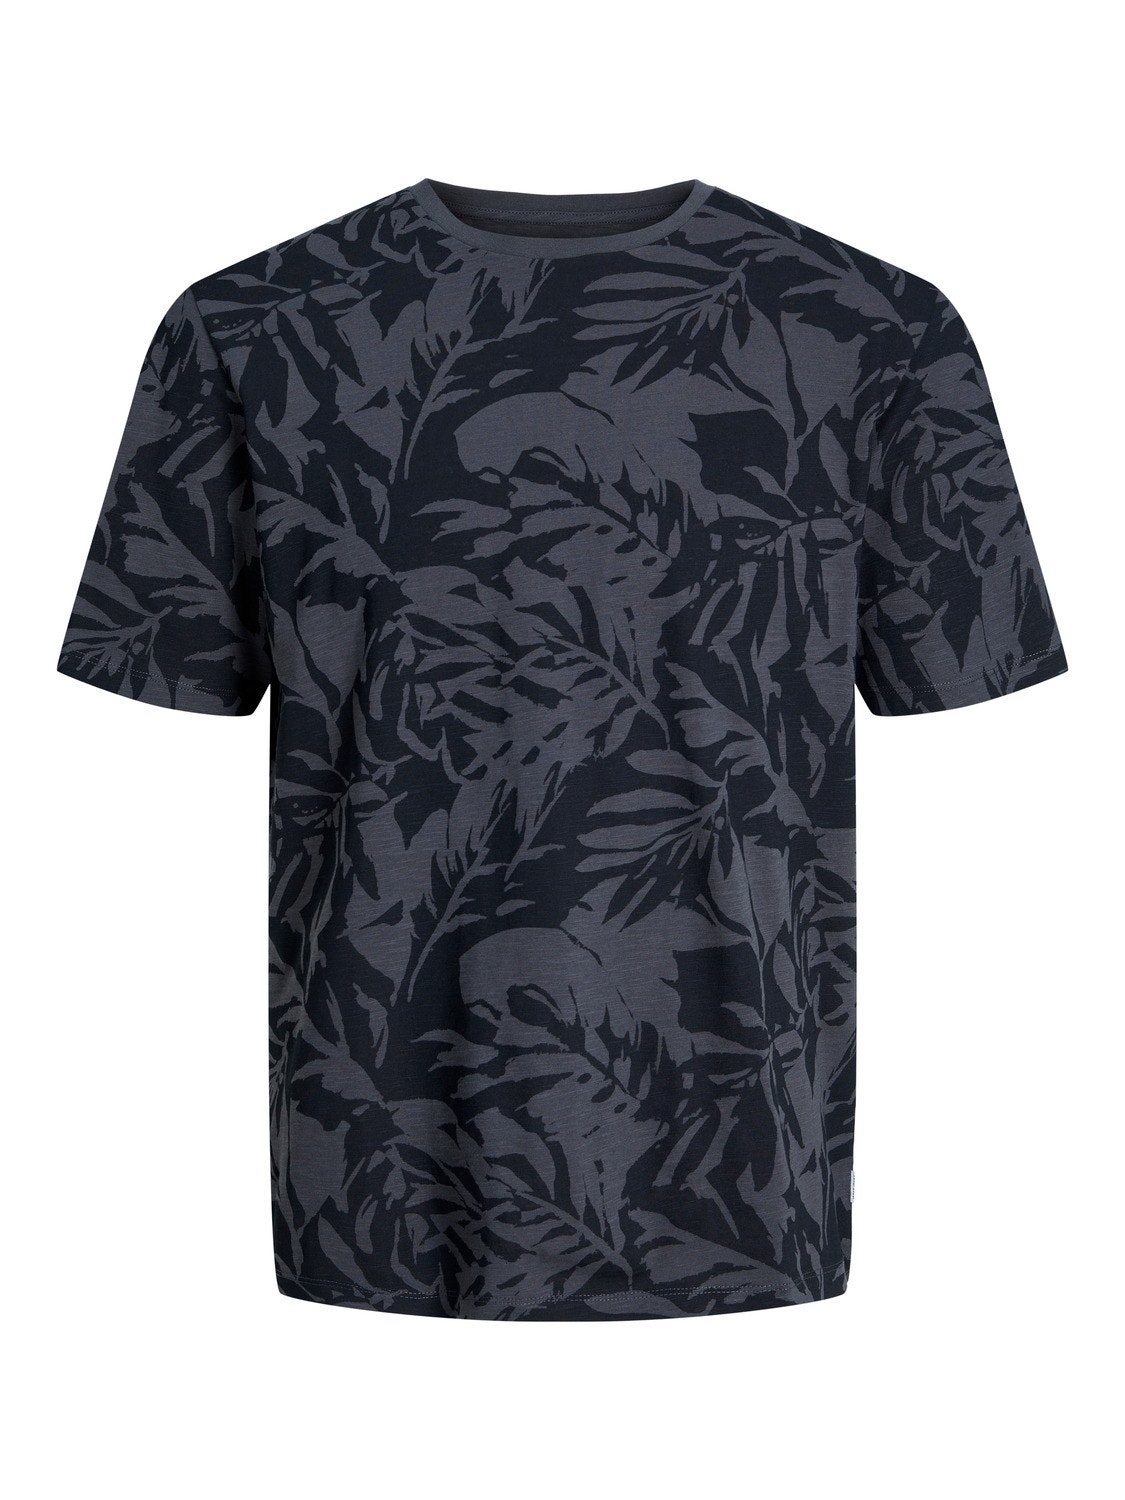 Jack & Jones T-shirt Estampado total Decote Redondo -Asphalt - 12249188